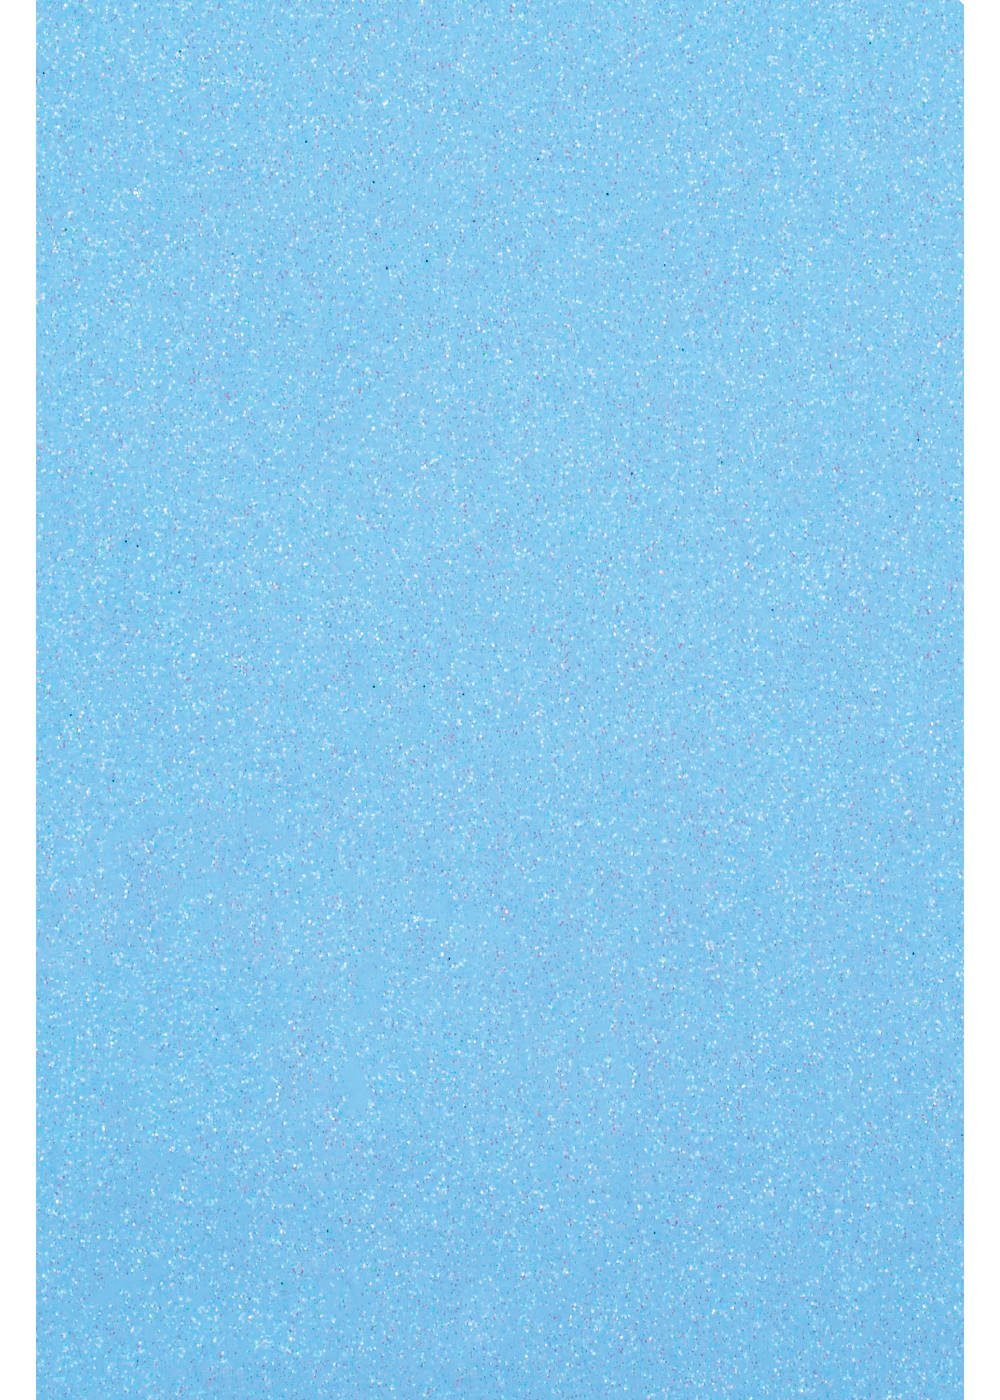 Hilltop Transparentpapier Glitzer Transferfolie/Textilfolie zum Aufbügeln, perfekt zum Plottern Neon Blue